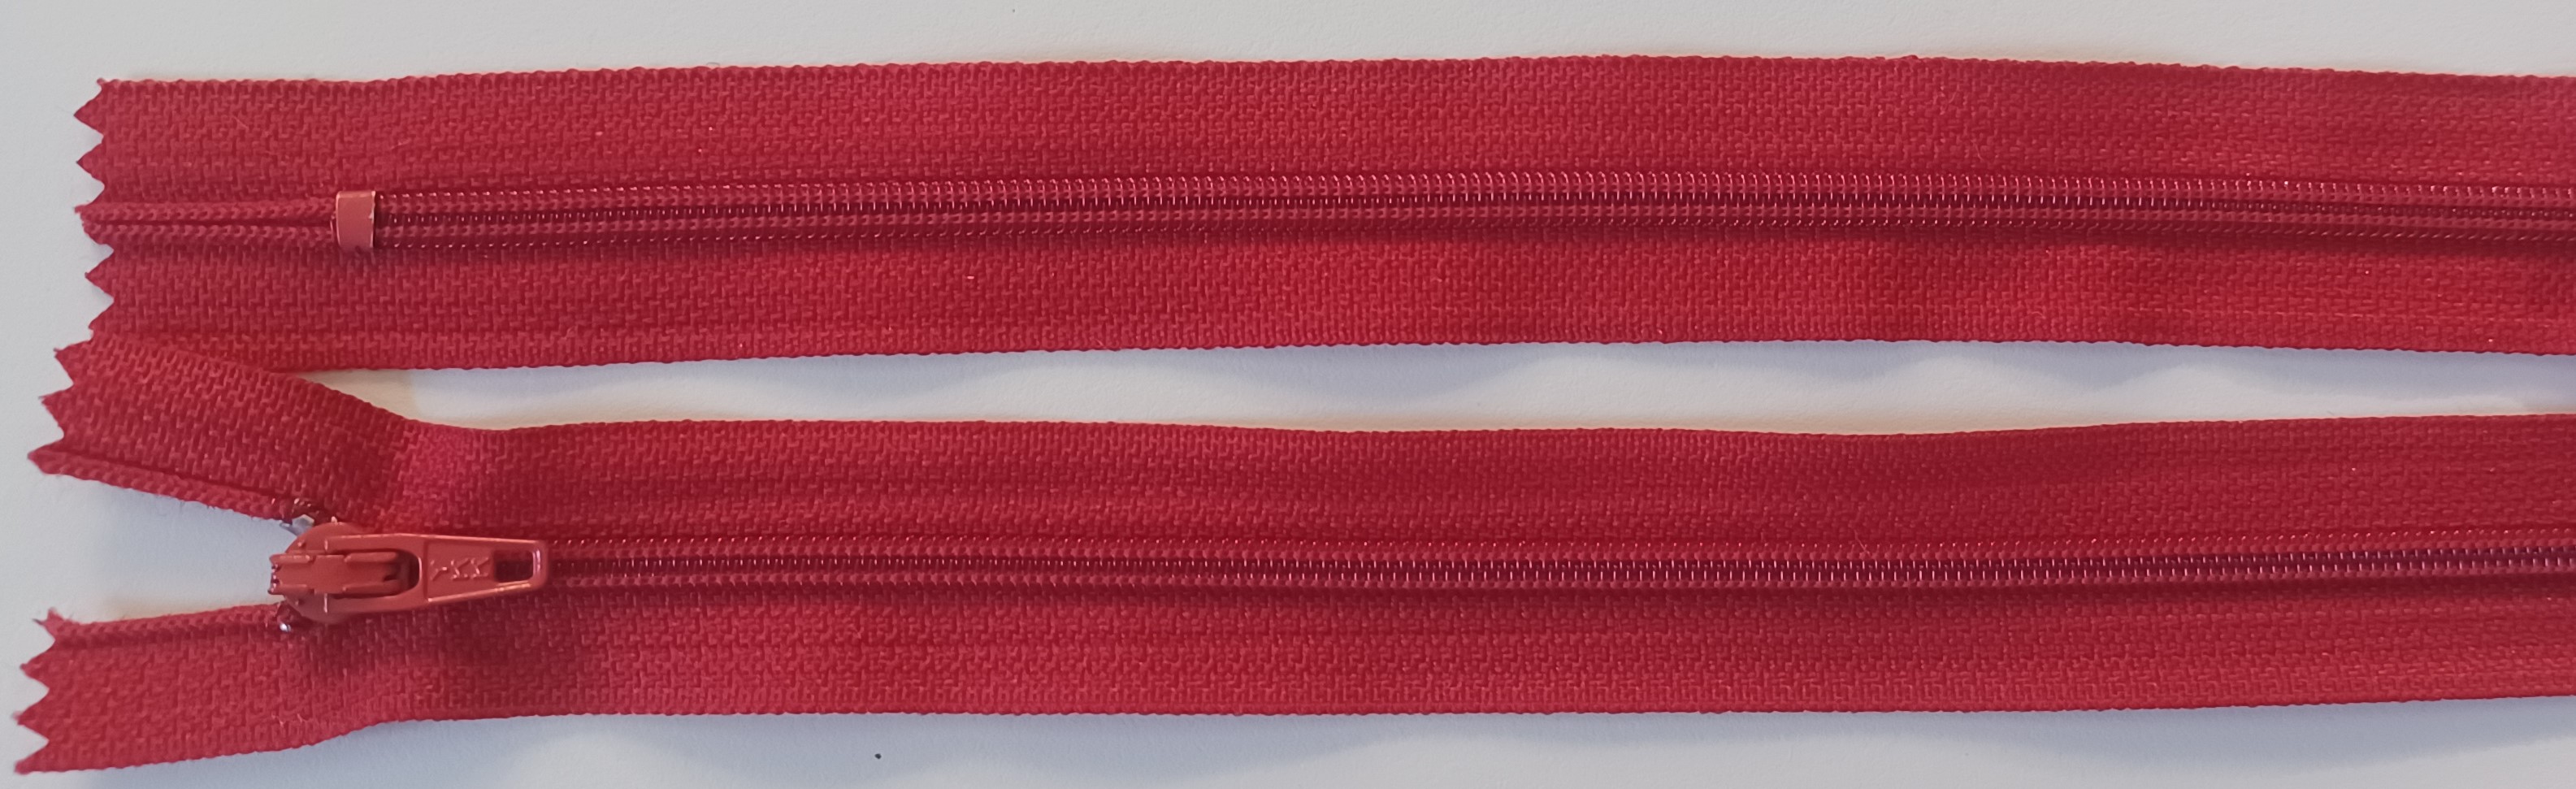 YKK 7.5" Red Nylon Coil Zipper